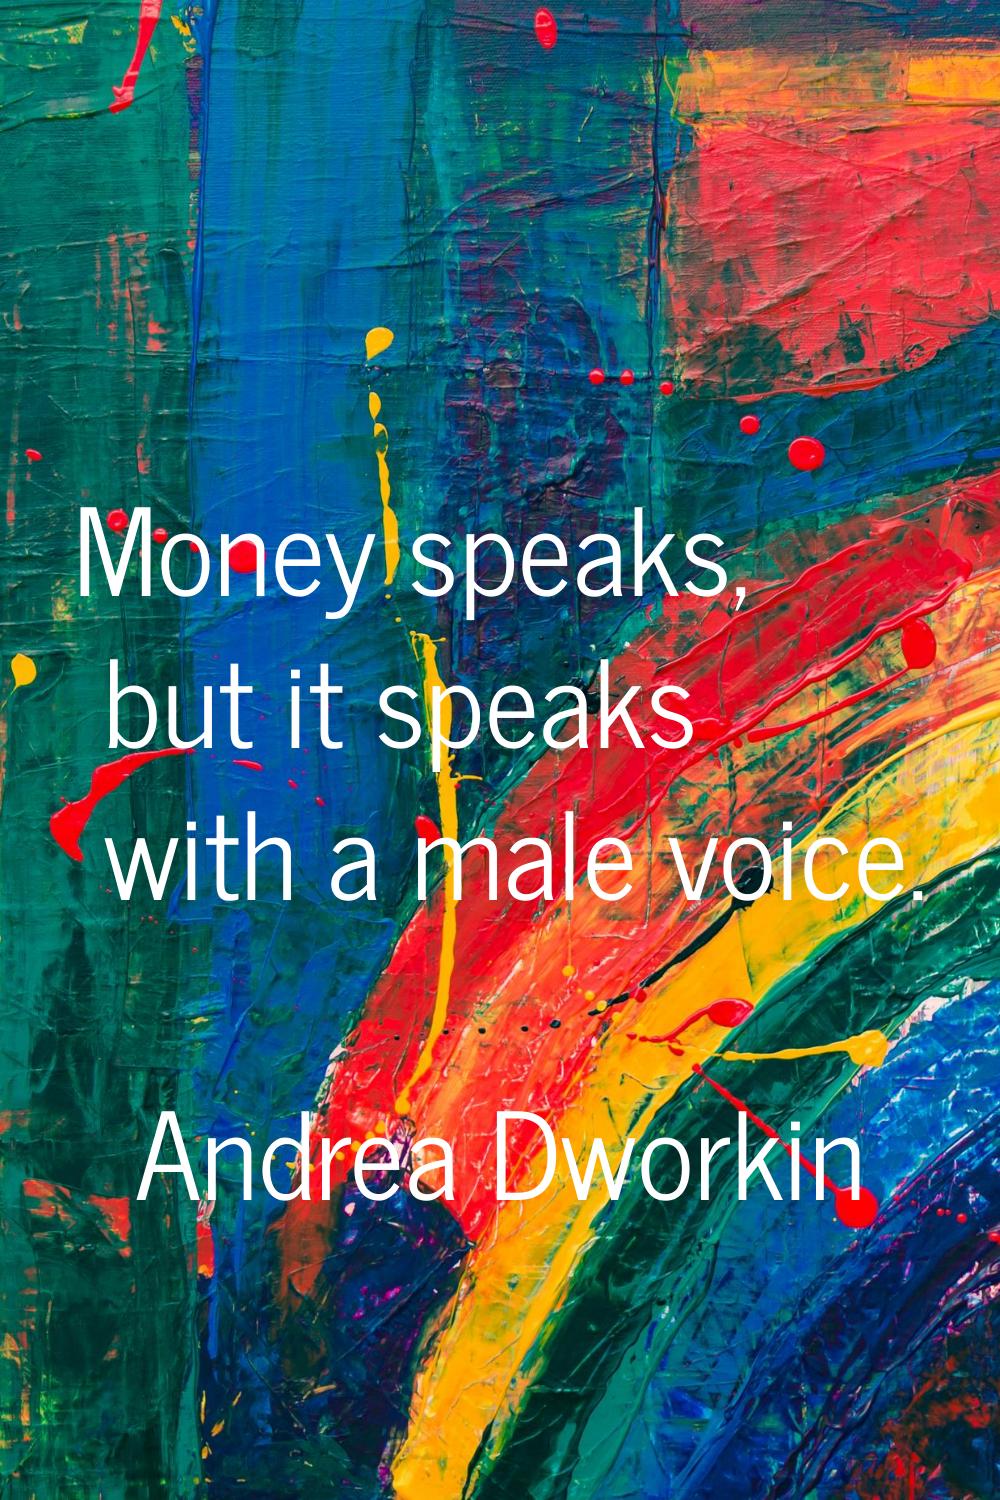 Money speaks, but it speaks with a male voice.